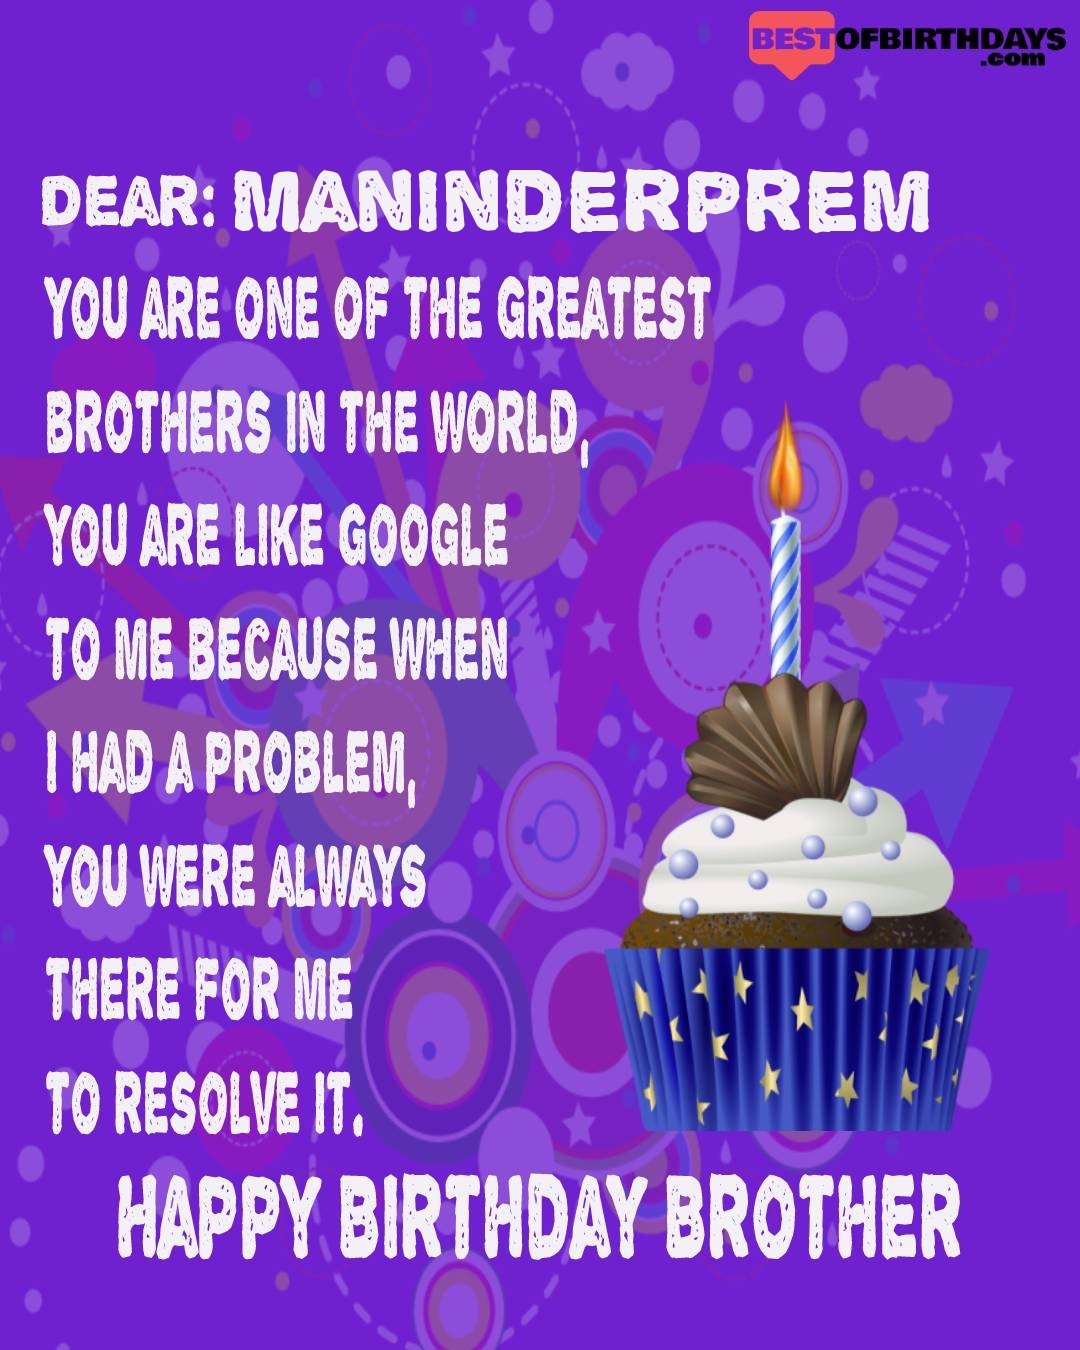 Happy birthday maninderprem bhai brother bro